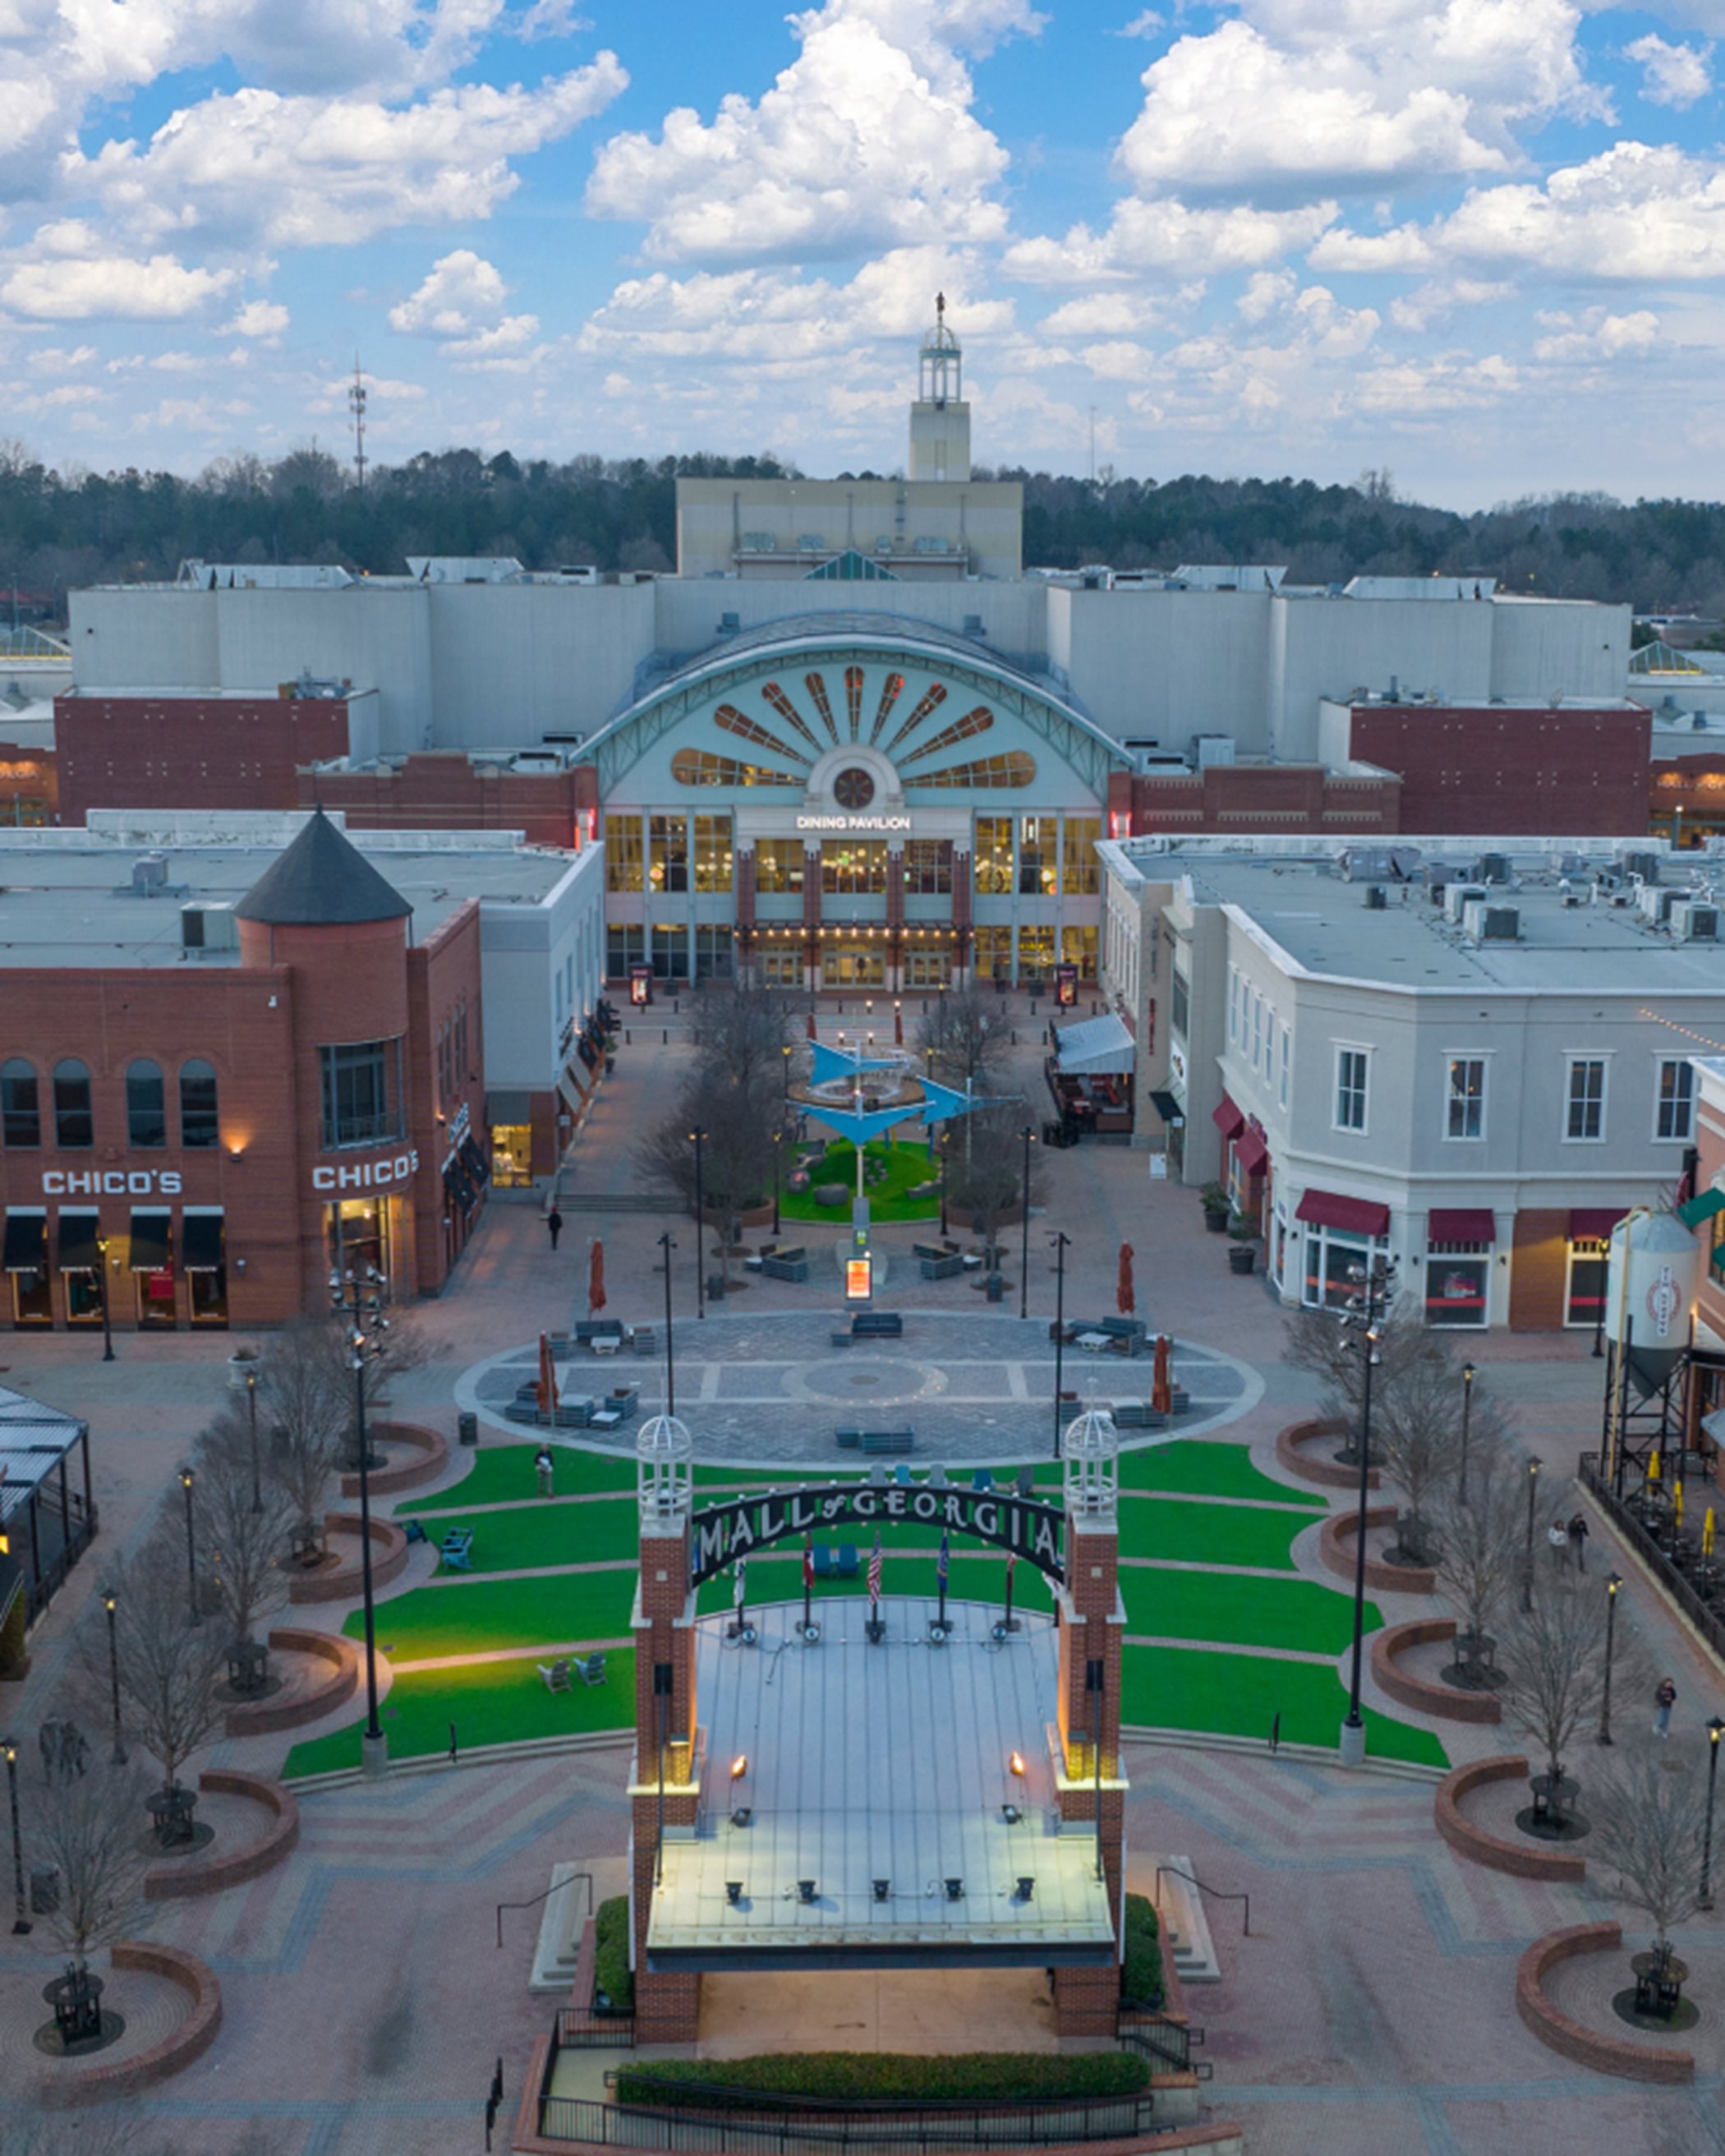 The Mall of Georgia